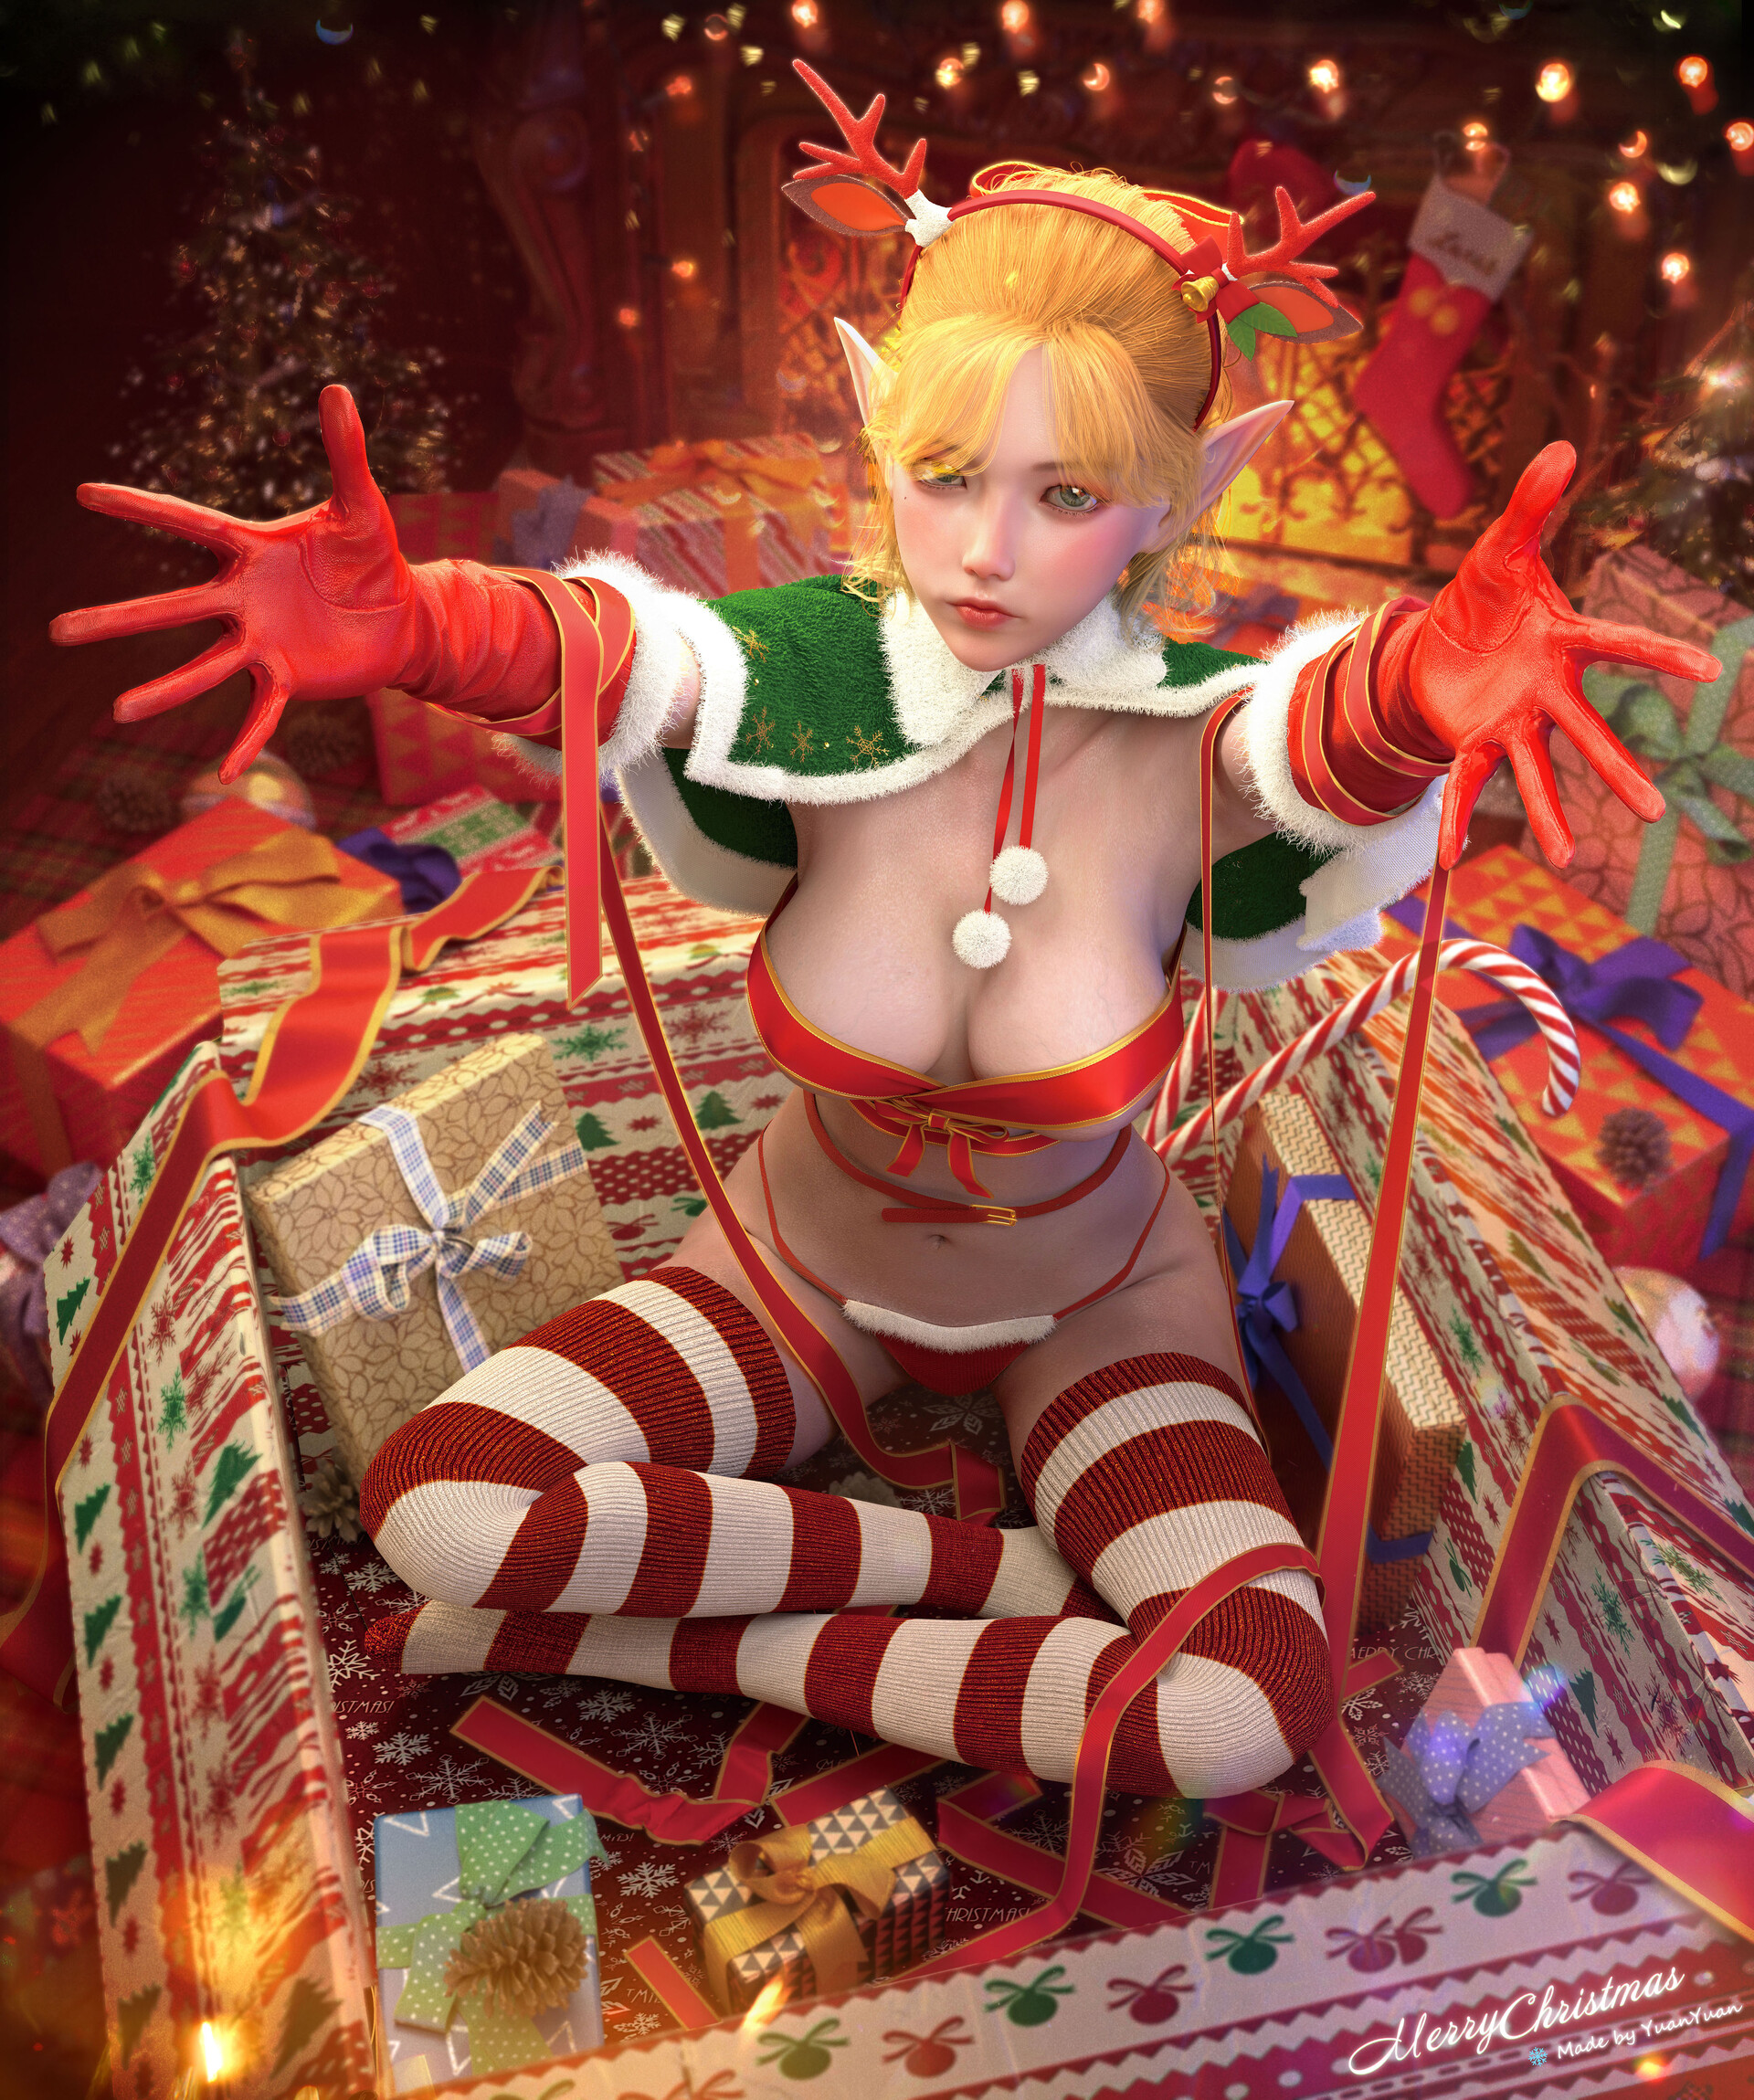 General 1920x2299 Yuan Yuan CGI women blonde Santa girl ribbon stripes Christmas presents naked ribbon panties